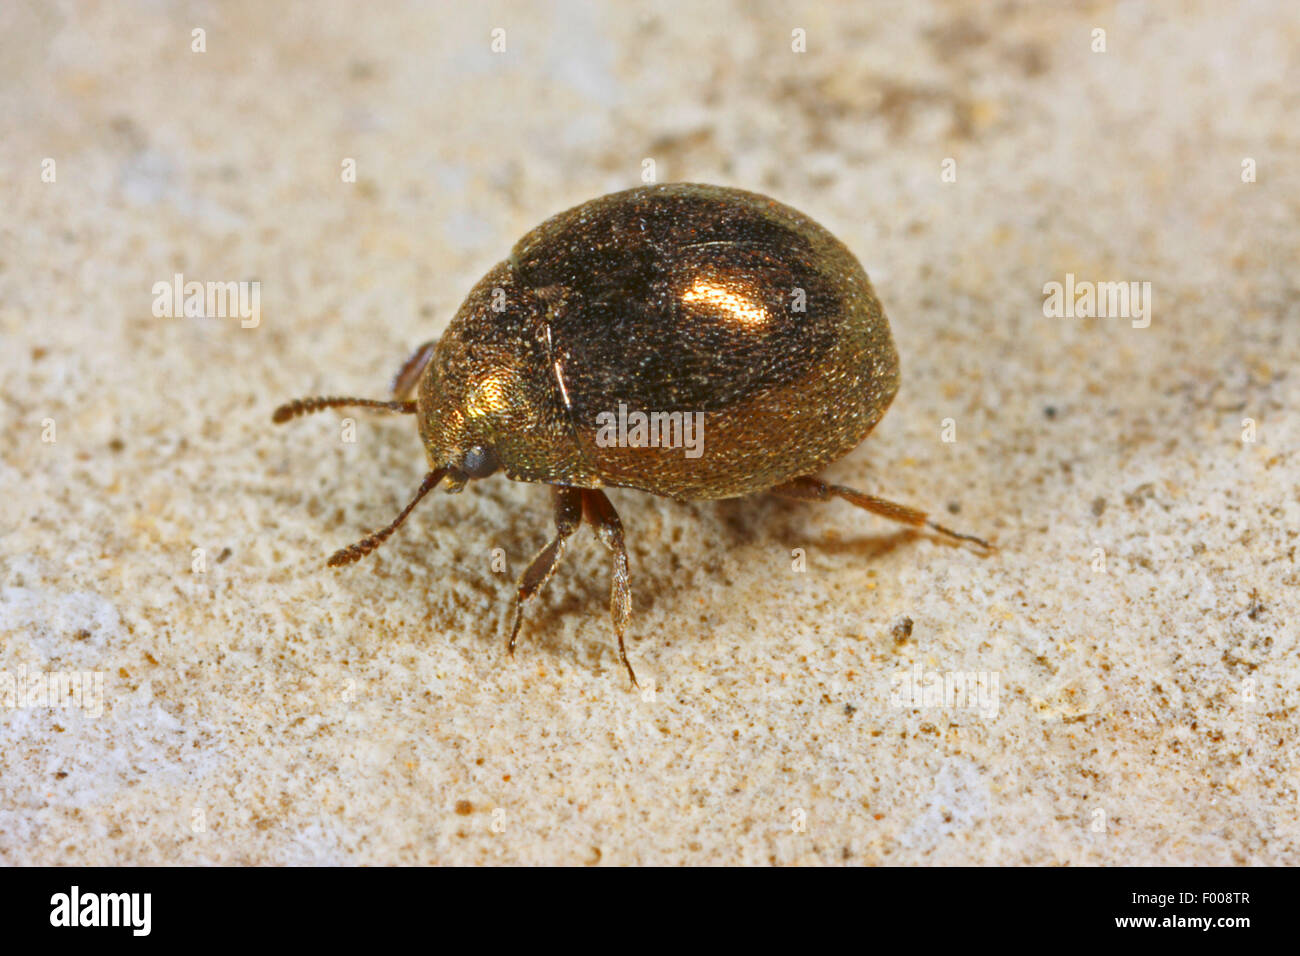 Pill beetle (Lamprobyrrhulus nitidus, Byrrhus nitidus), on a stone, full-length portrait, Germany Stock Photo